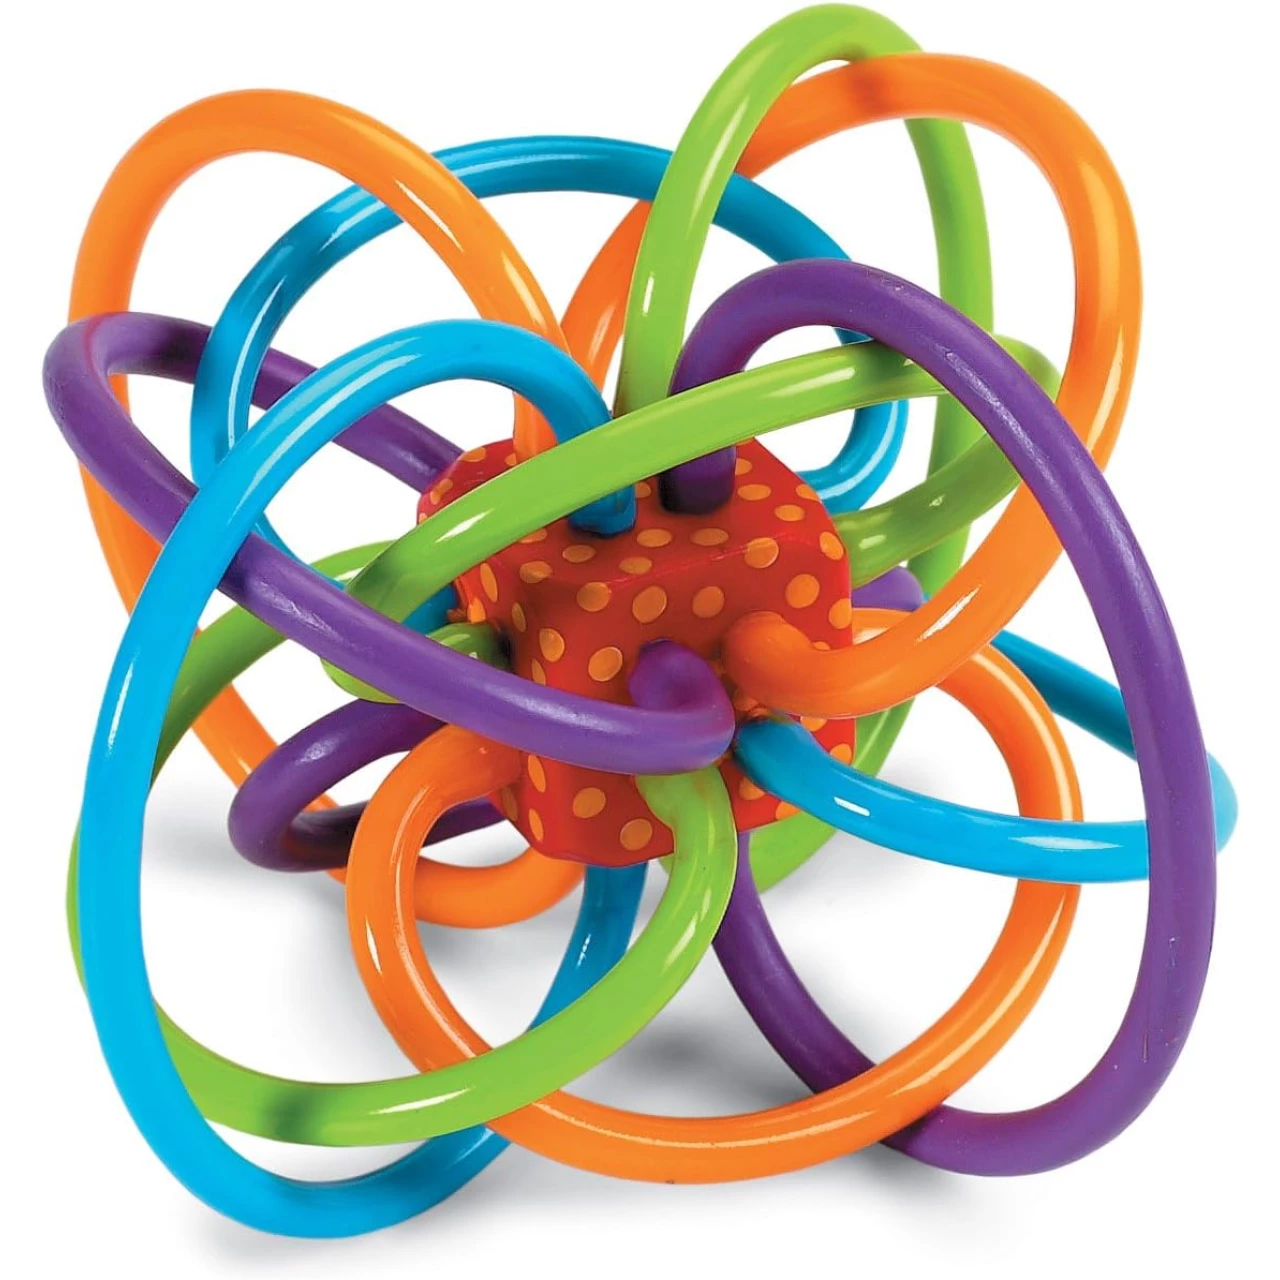 Manhattan Toy Winkel Rattle &amp; Sensory Teether Toy, Blue/Green/Orange, 5 Inch x 4 Inch x 3.5 Inch